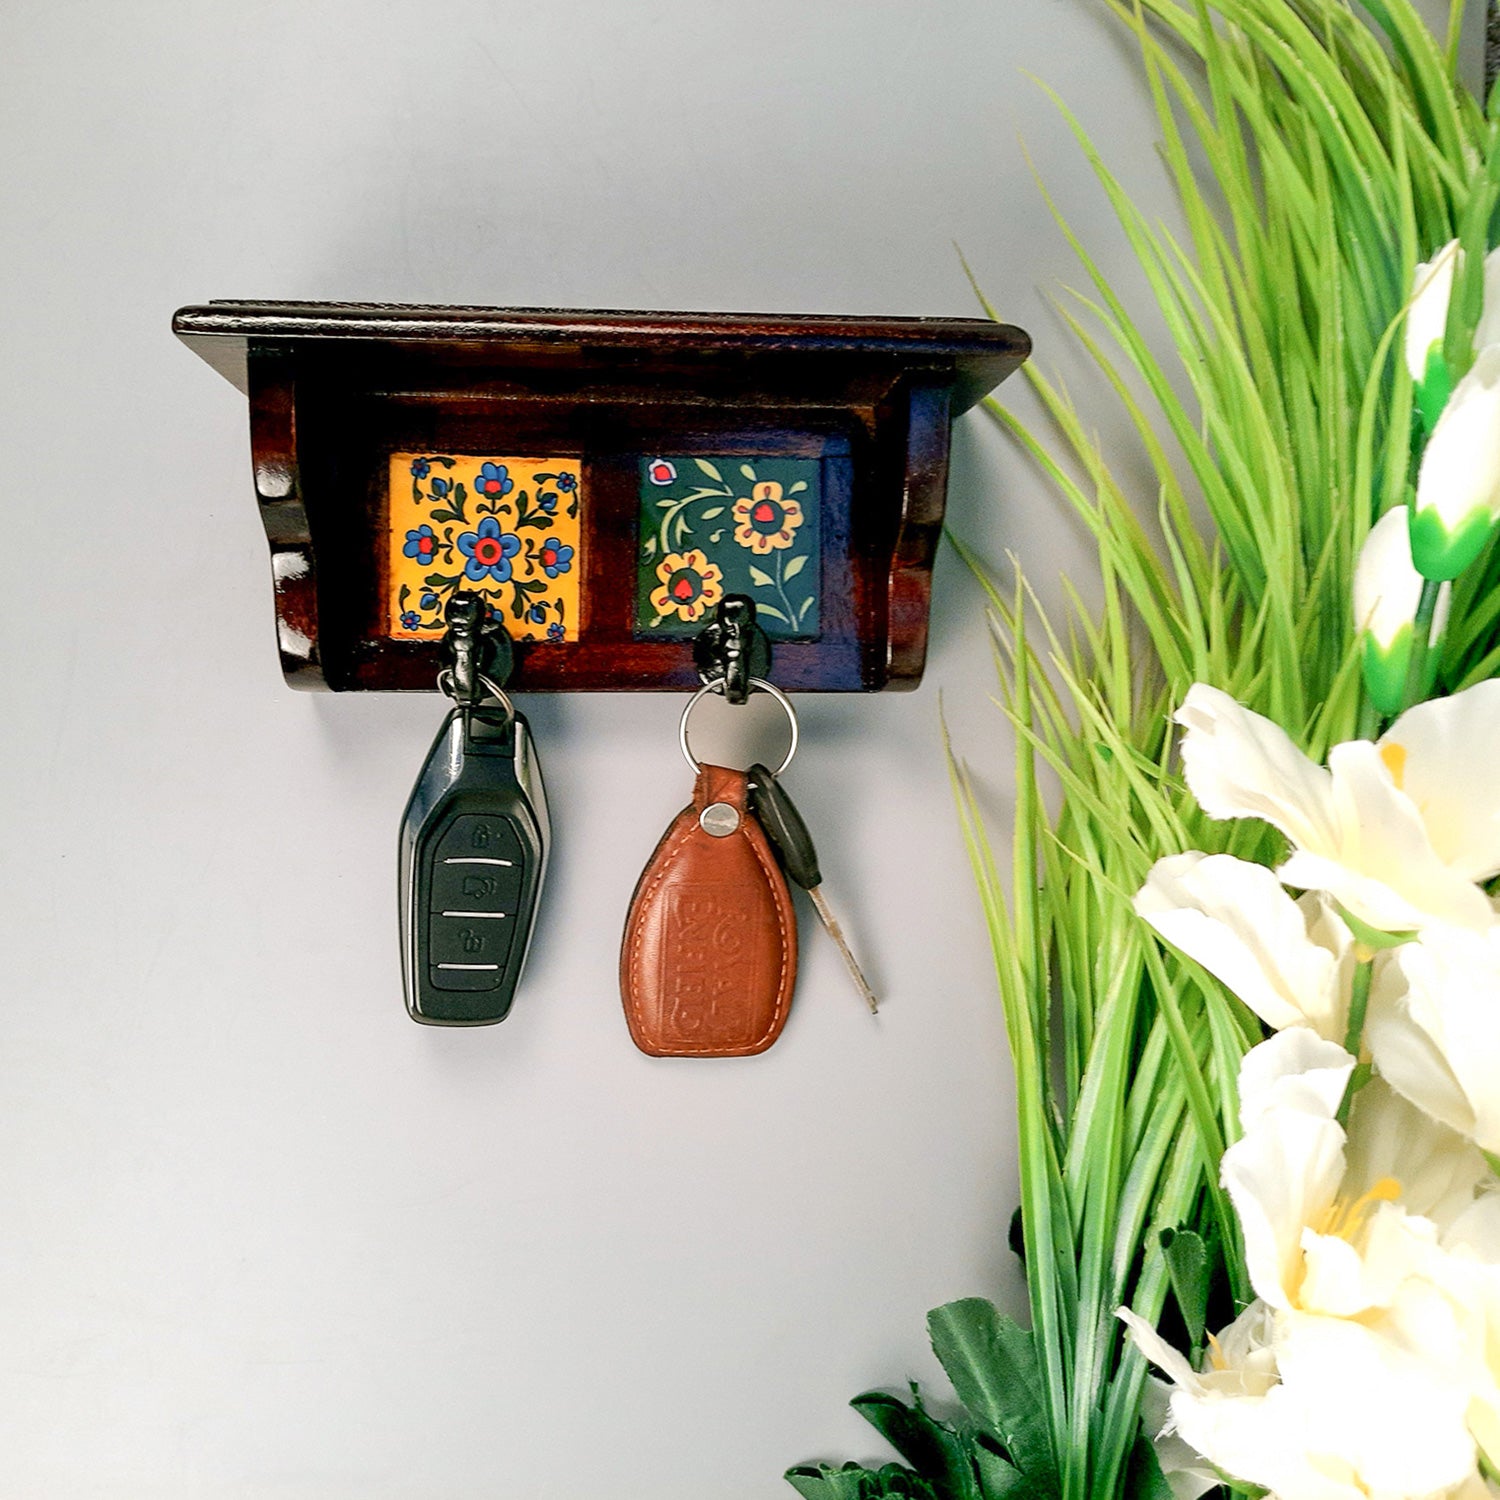 Wall Key Hooks With Wooden Shelf - Wall Mount | Floating Shelves For Decorating Showpieces, Vases, Candle Holders & Books | Key Holder Organiser - Home, Entrance, Office Decor & Gifts - Set of 2 - Apkamart